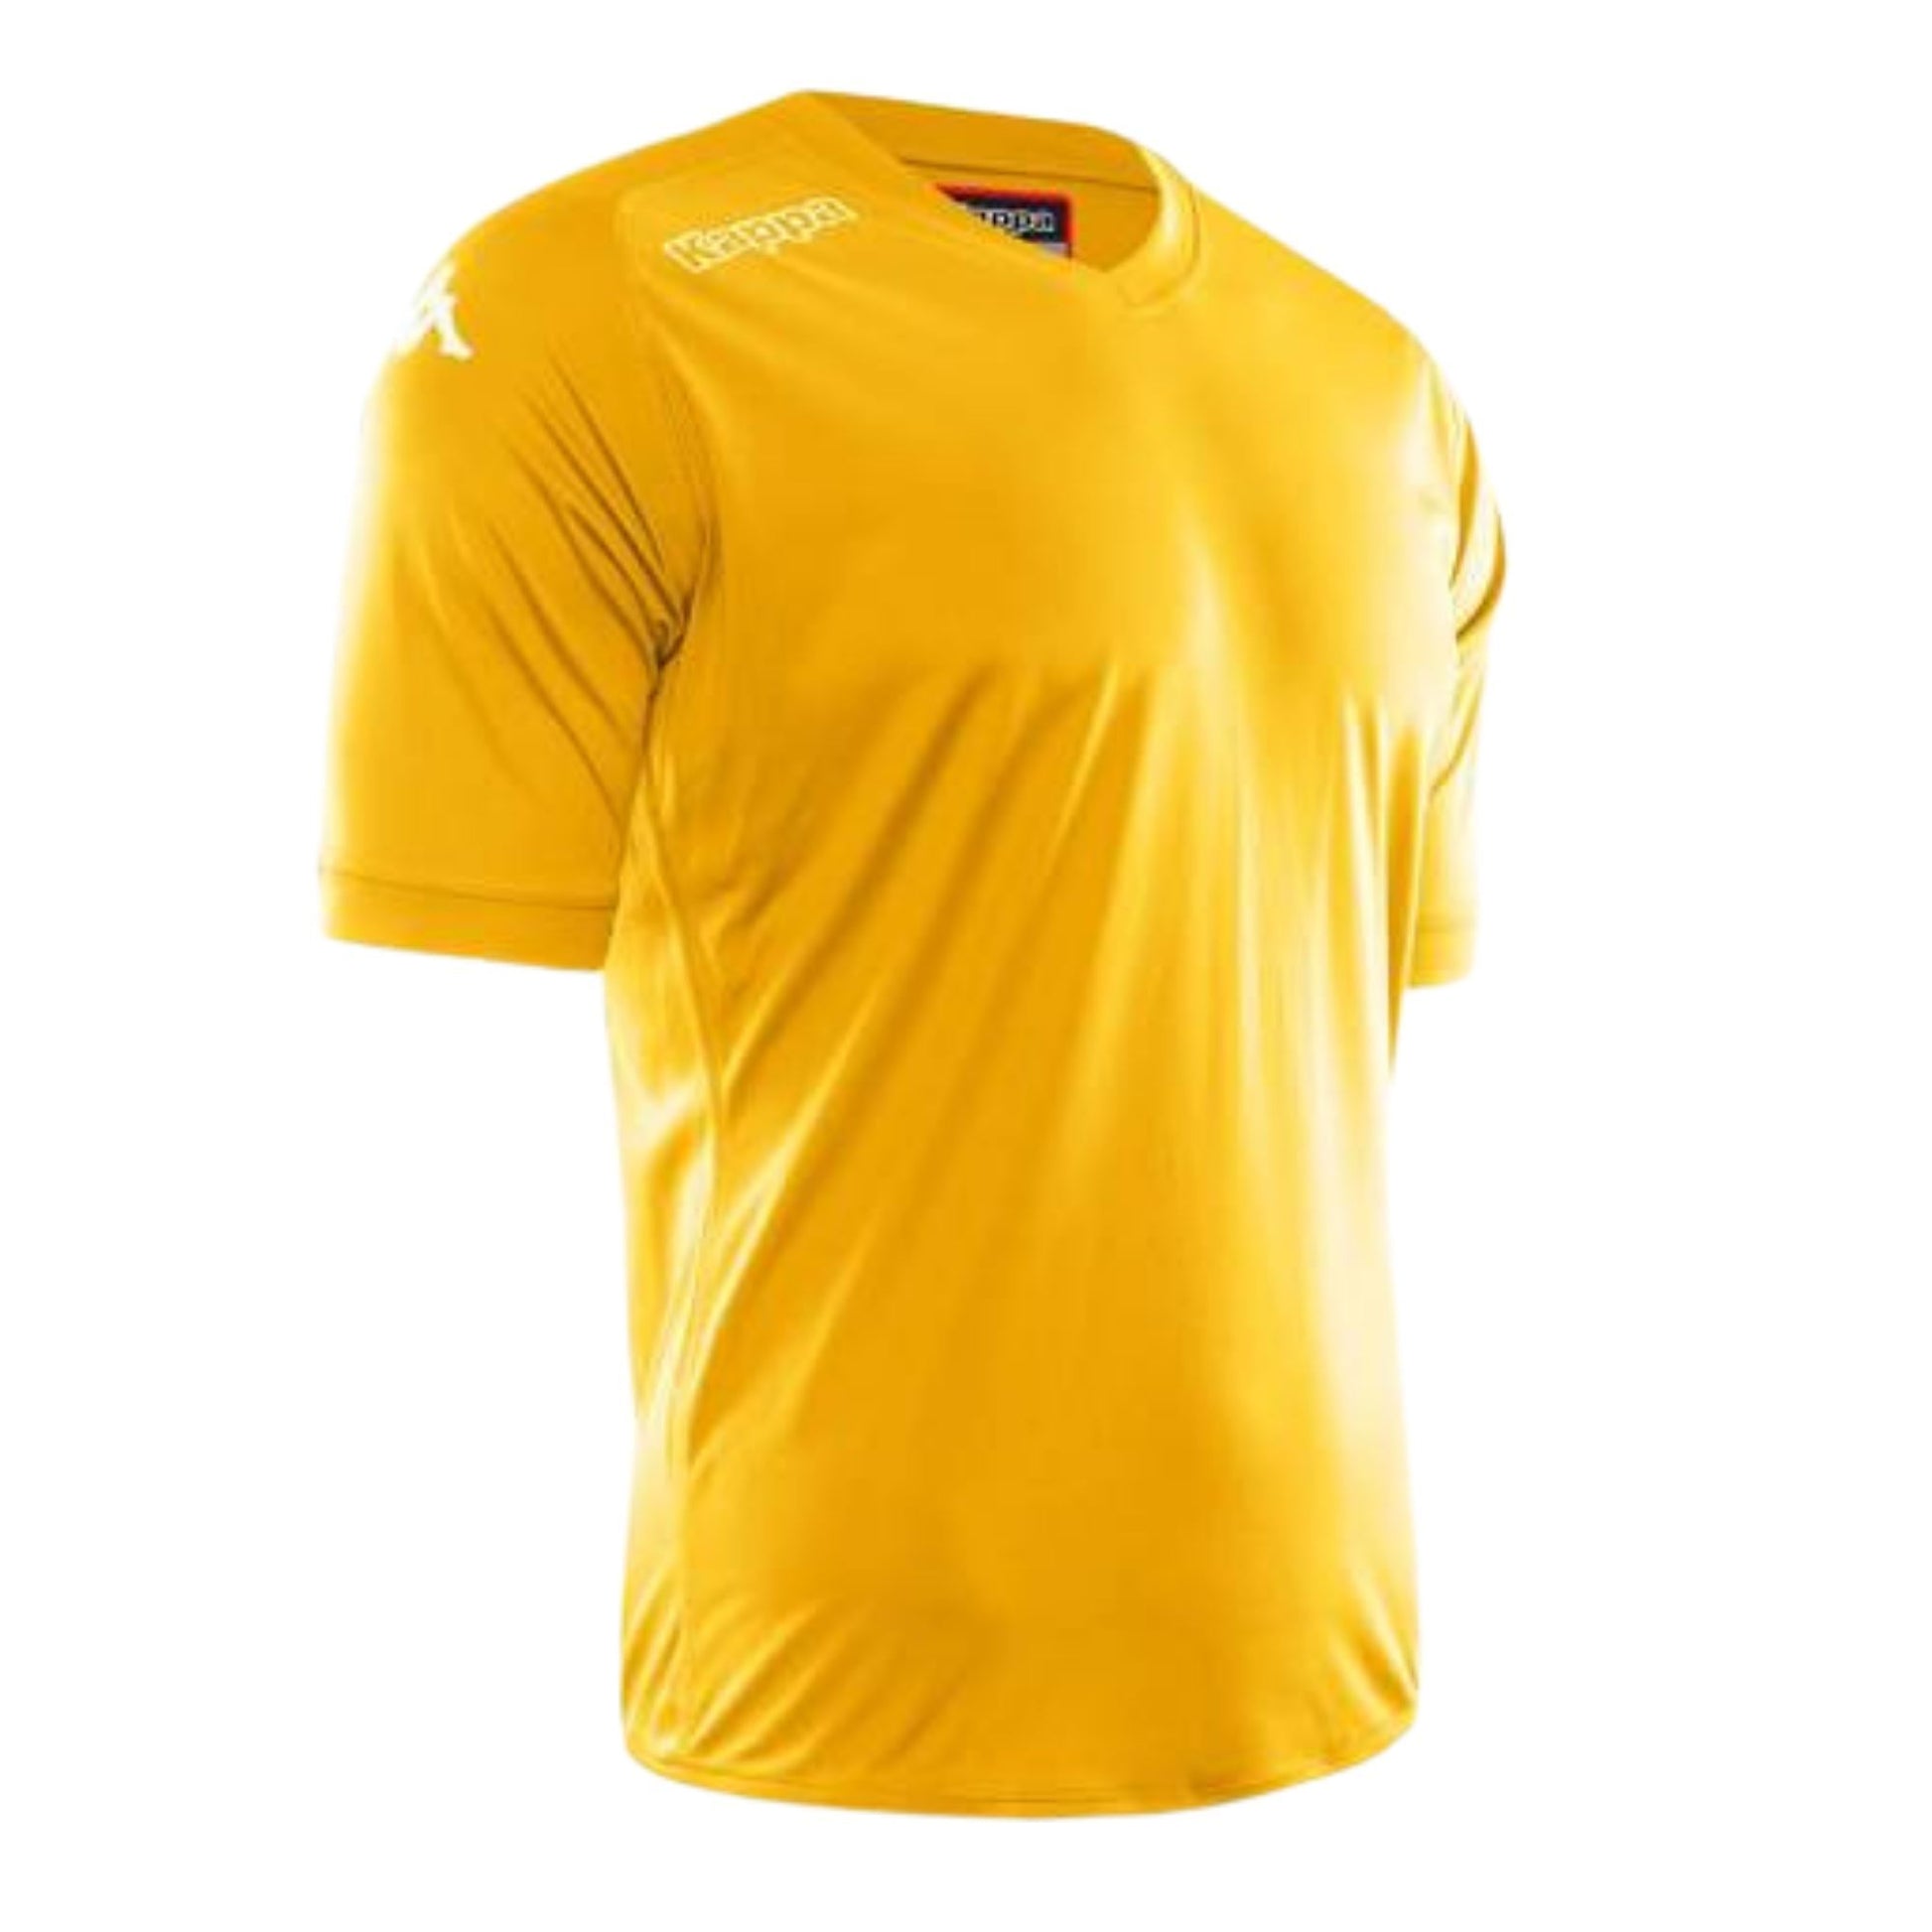 Kappa Short Sleeve Jersey Youth Yellow Shirts & Tops KAPPA 